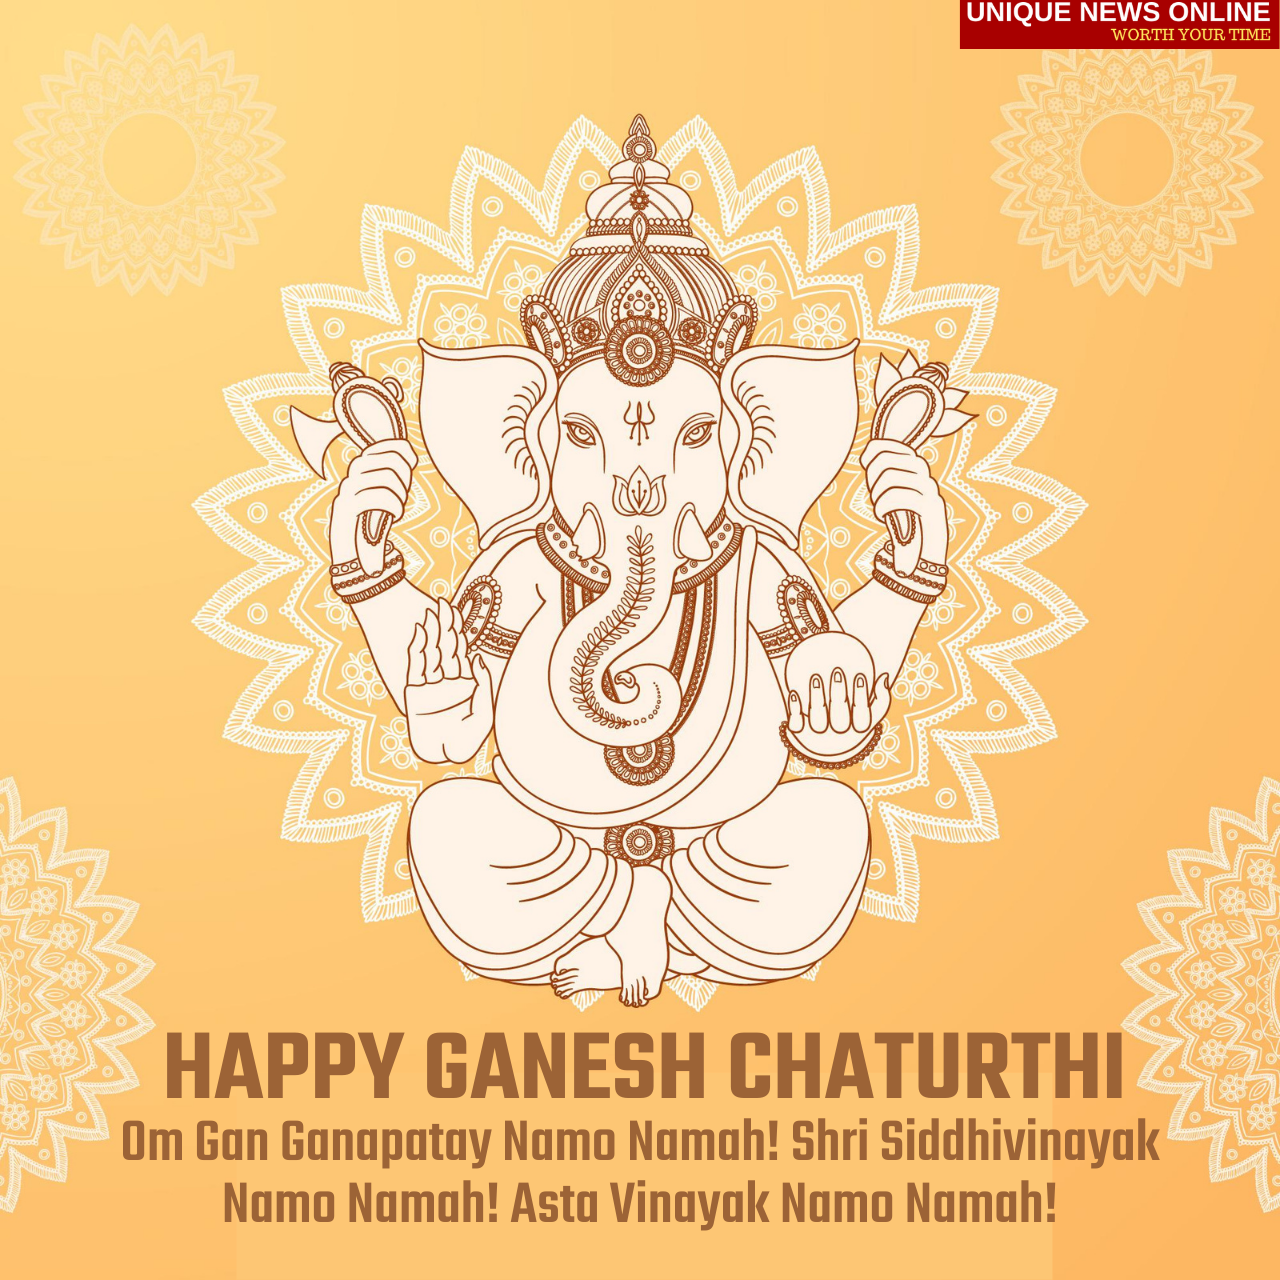 Happy Ganesh Chaturthi 2021 WhatsApp Status, DP, HD Images, Caption, Poster, Wallpaper, and Banner to greet anyone on Vinayaka Chaturthi